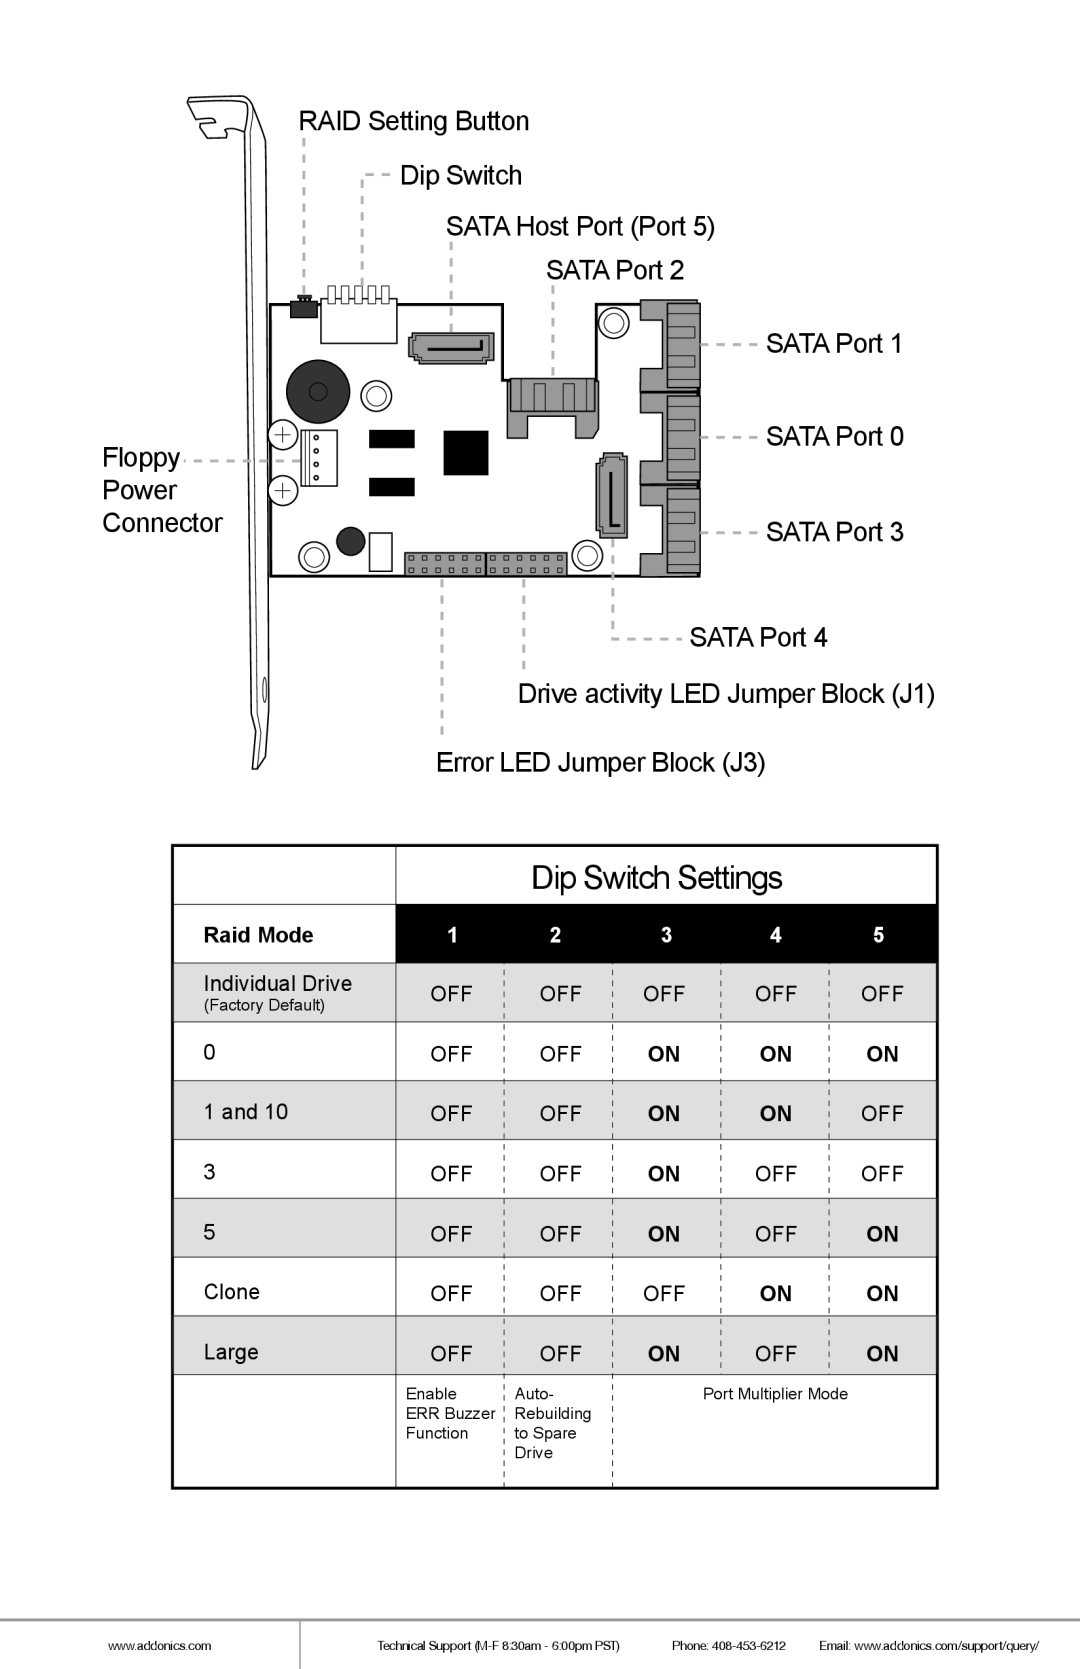 Addonics Technologies RT93DAHX manual Dip Switch Settings, RAID Setting Button Dip Switch, SATA Host Port Port SATA Port 